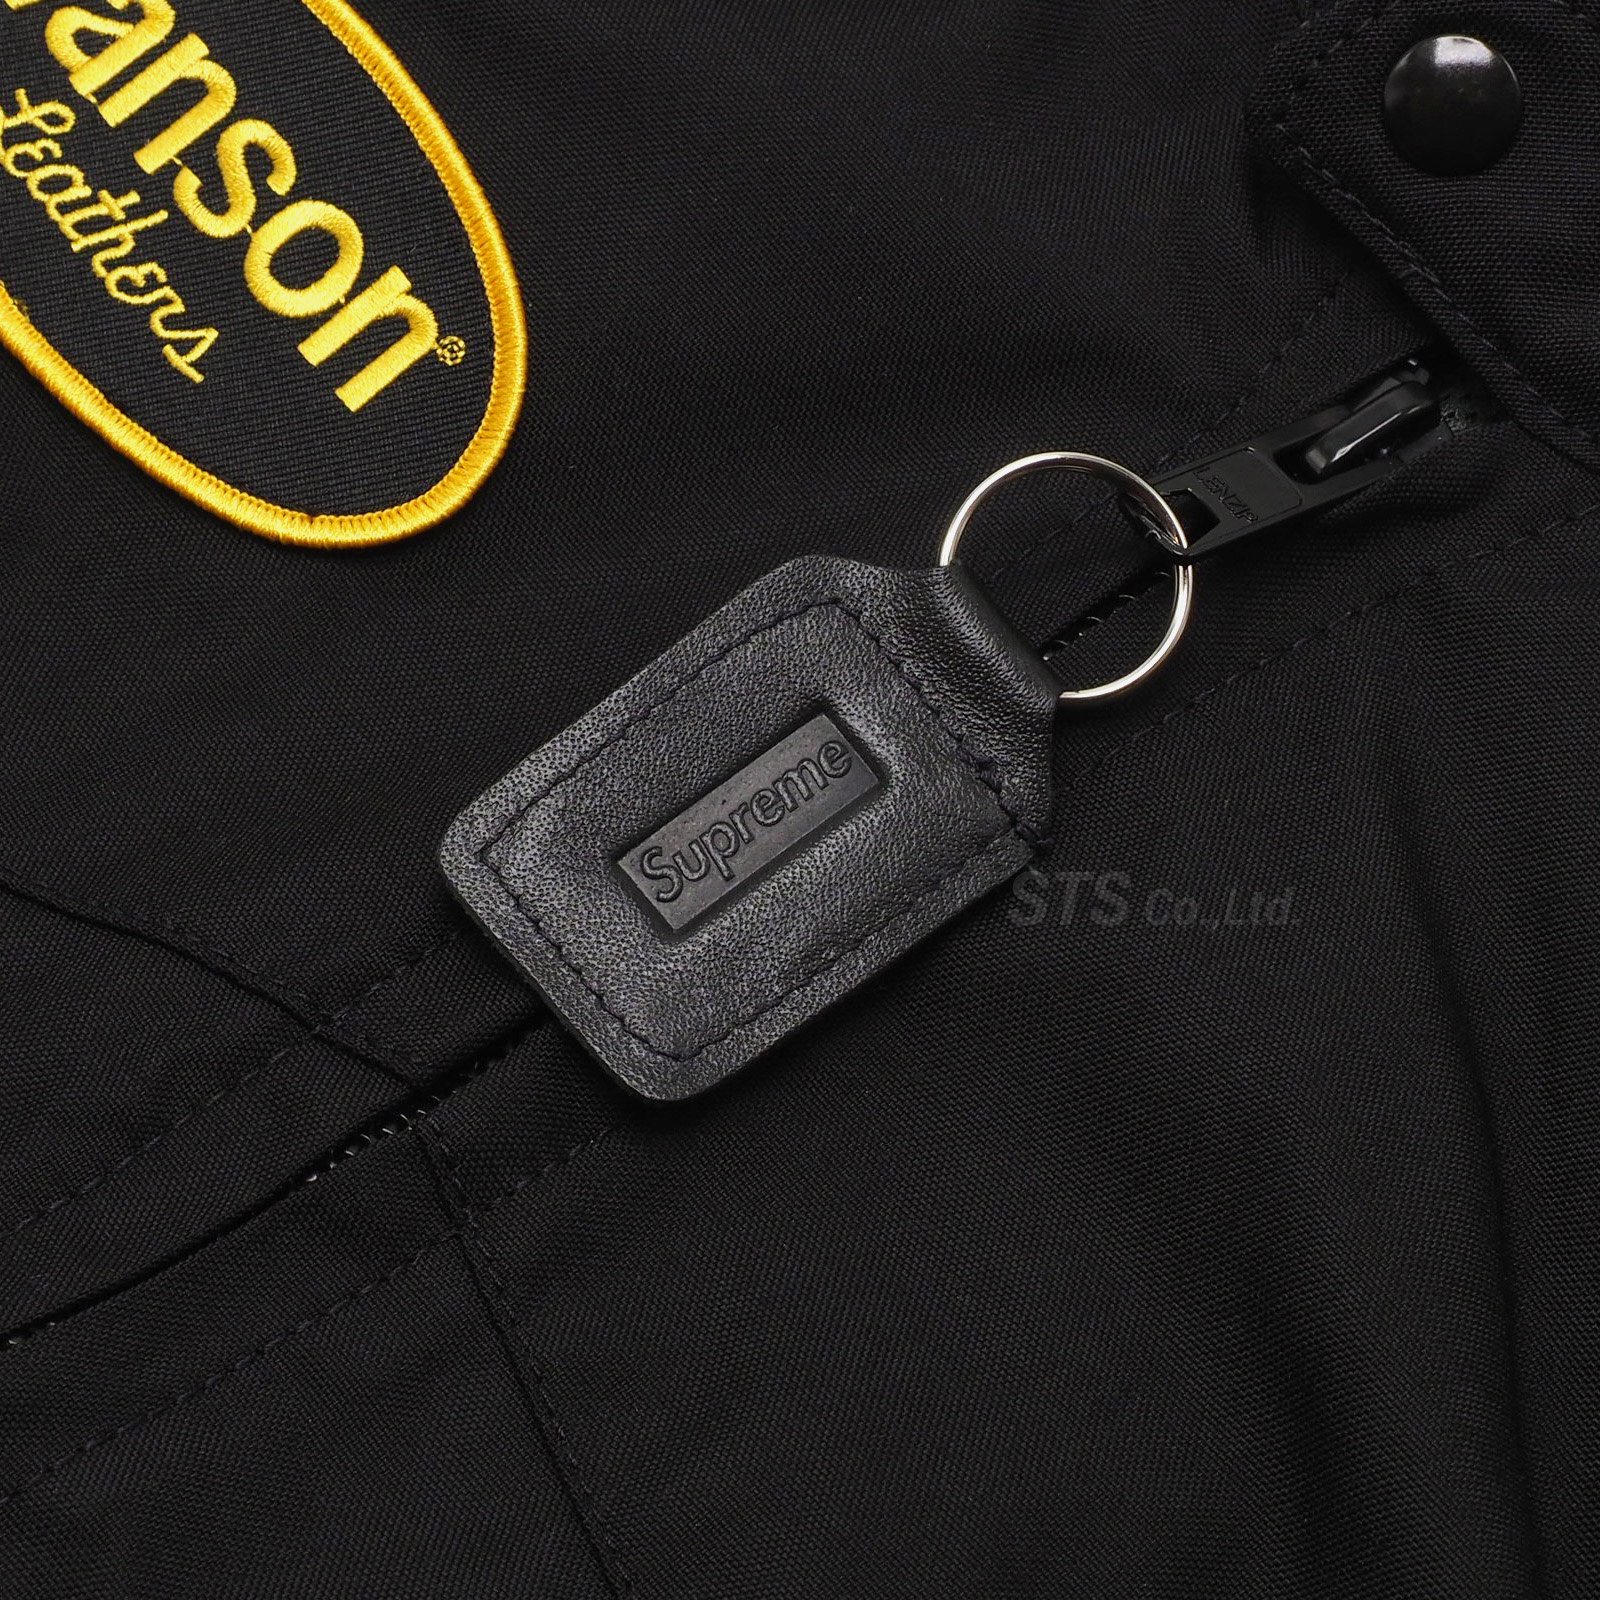 Supreme/Vanson Leathers Cordura Jacket - ParkSIDER